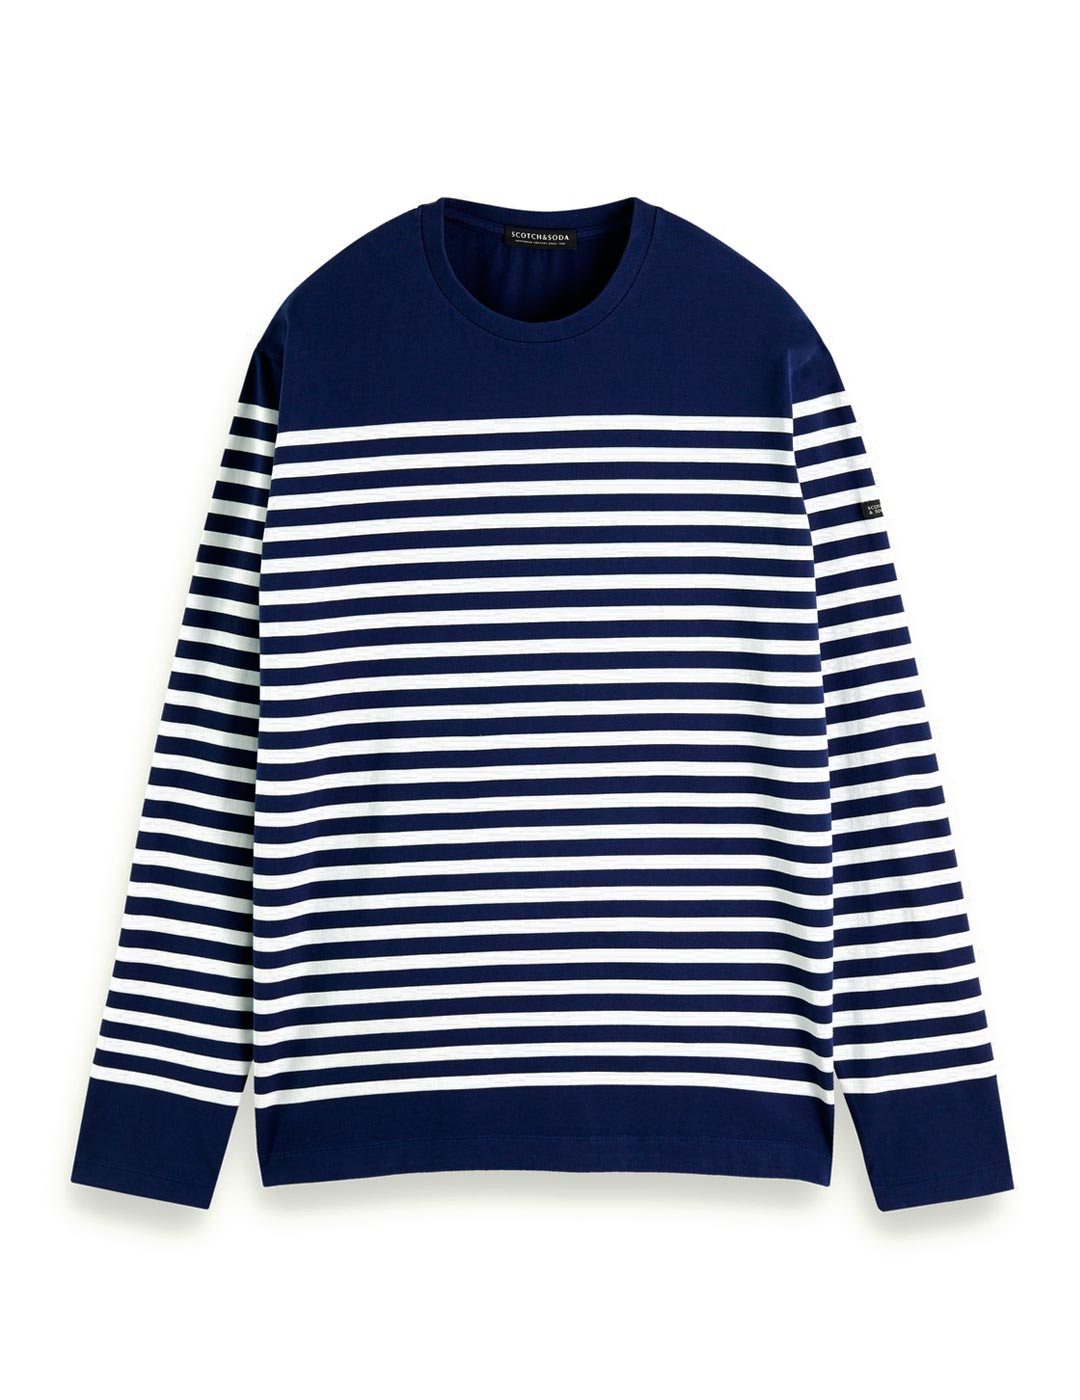 Scotch & Soda Long Sleeve Striped T-Shirt Navy Blue